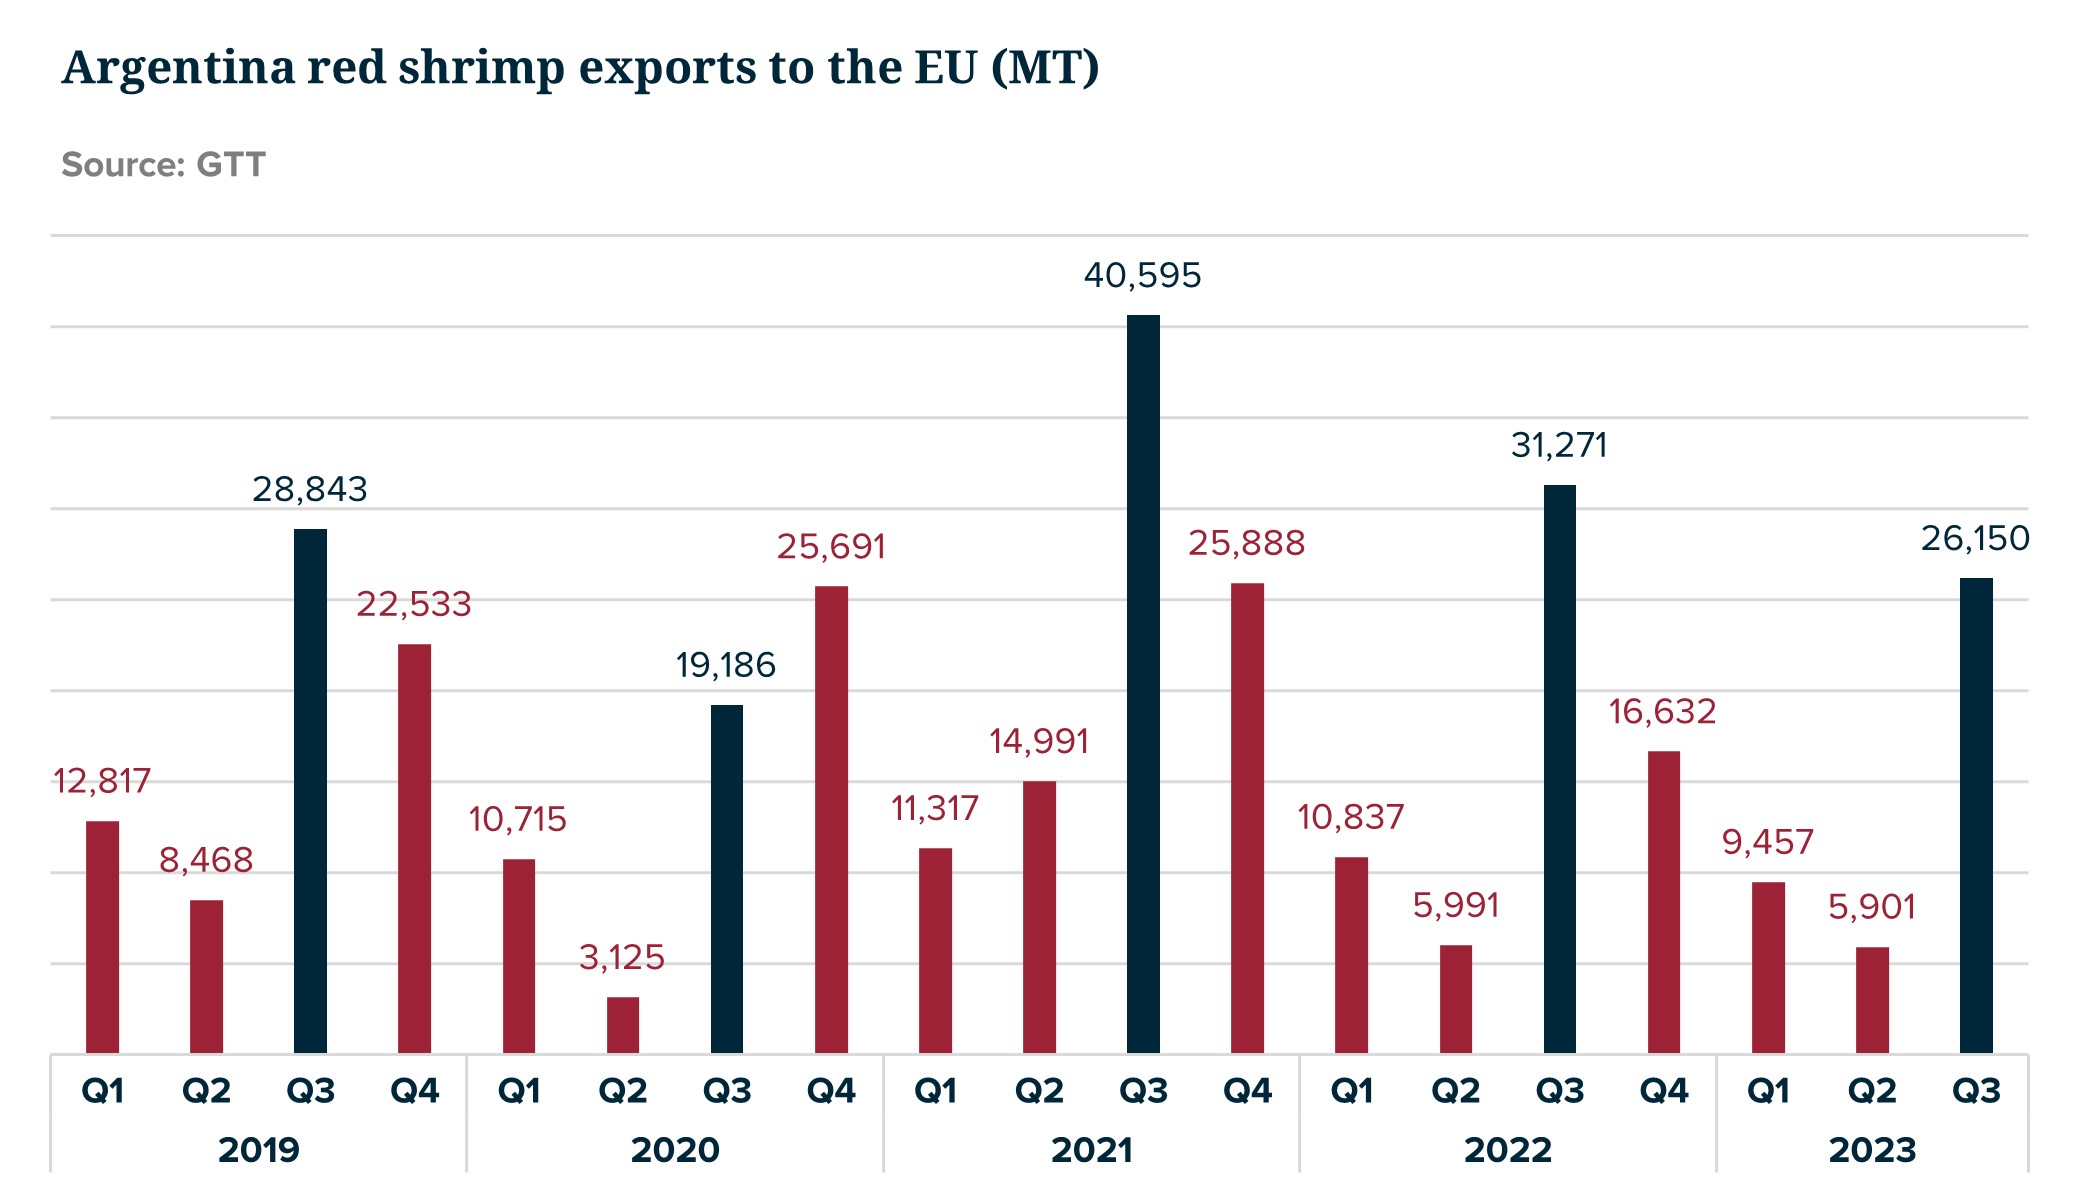 ANALYSIS: A Recent Uptick of Argentina Red Shrimp Exports to the EU